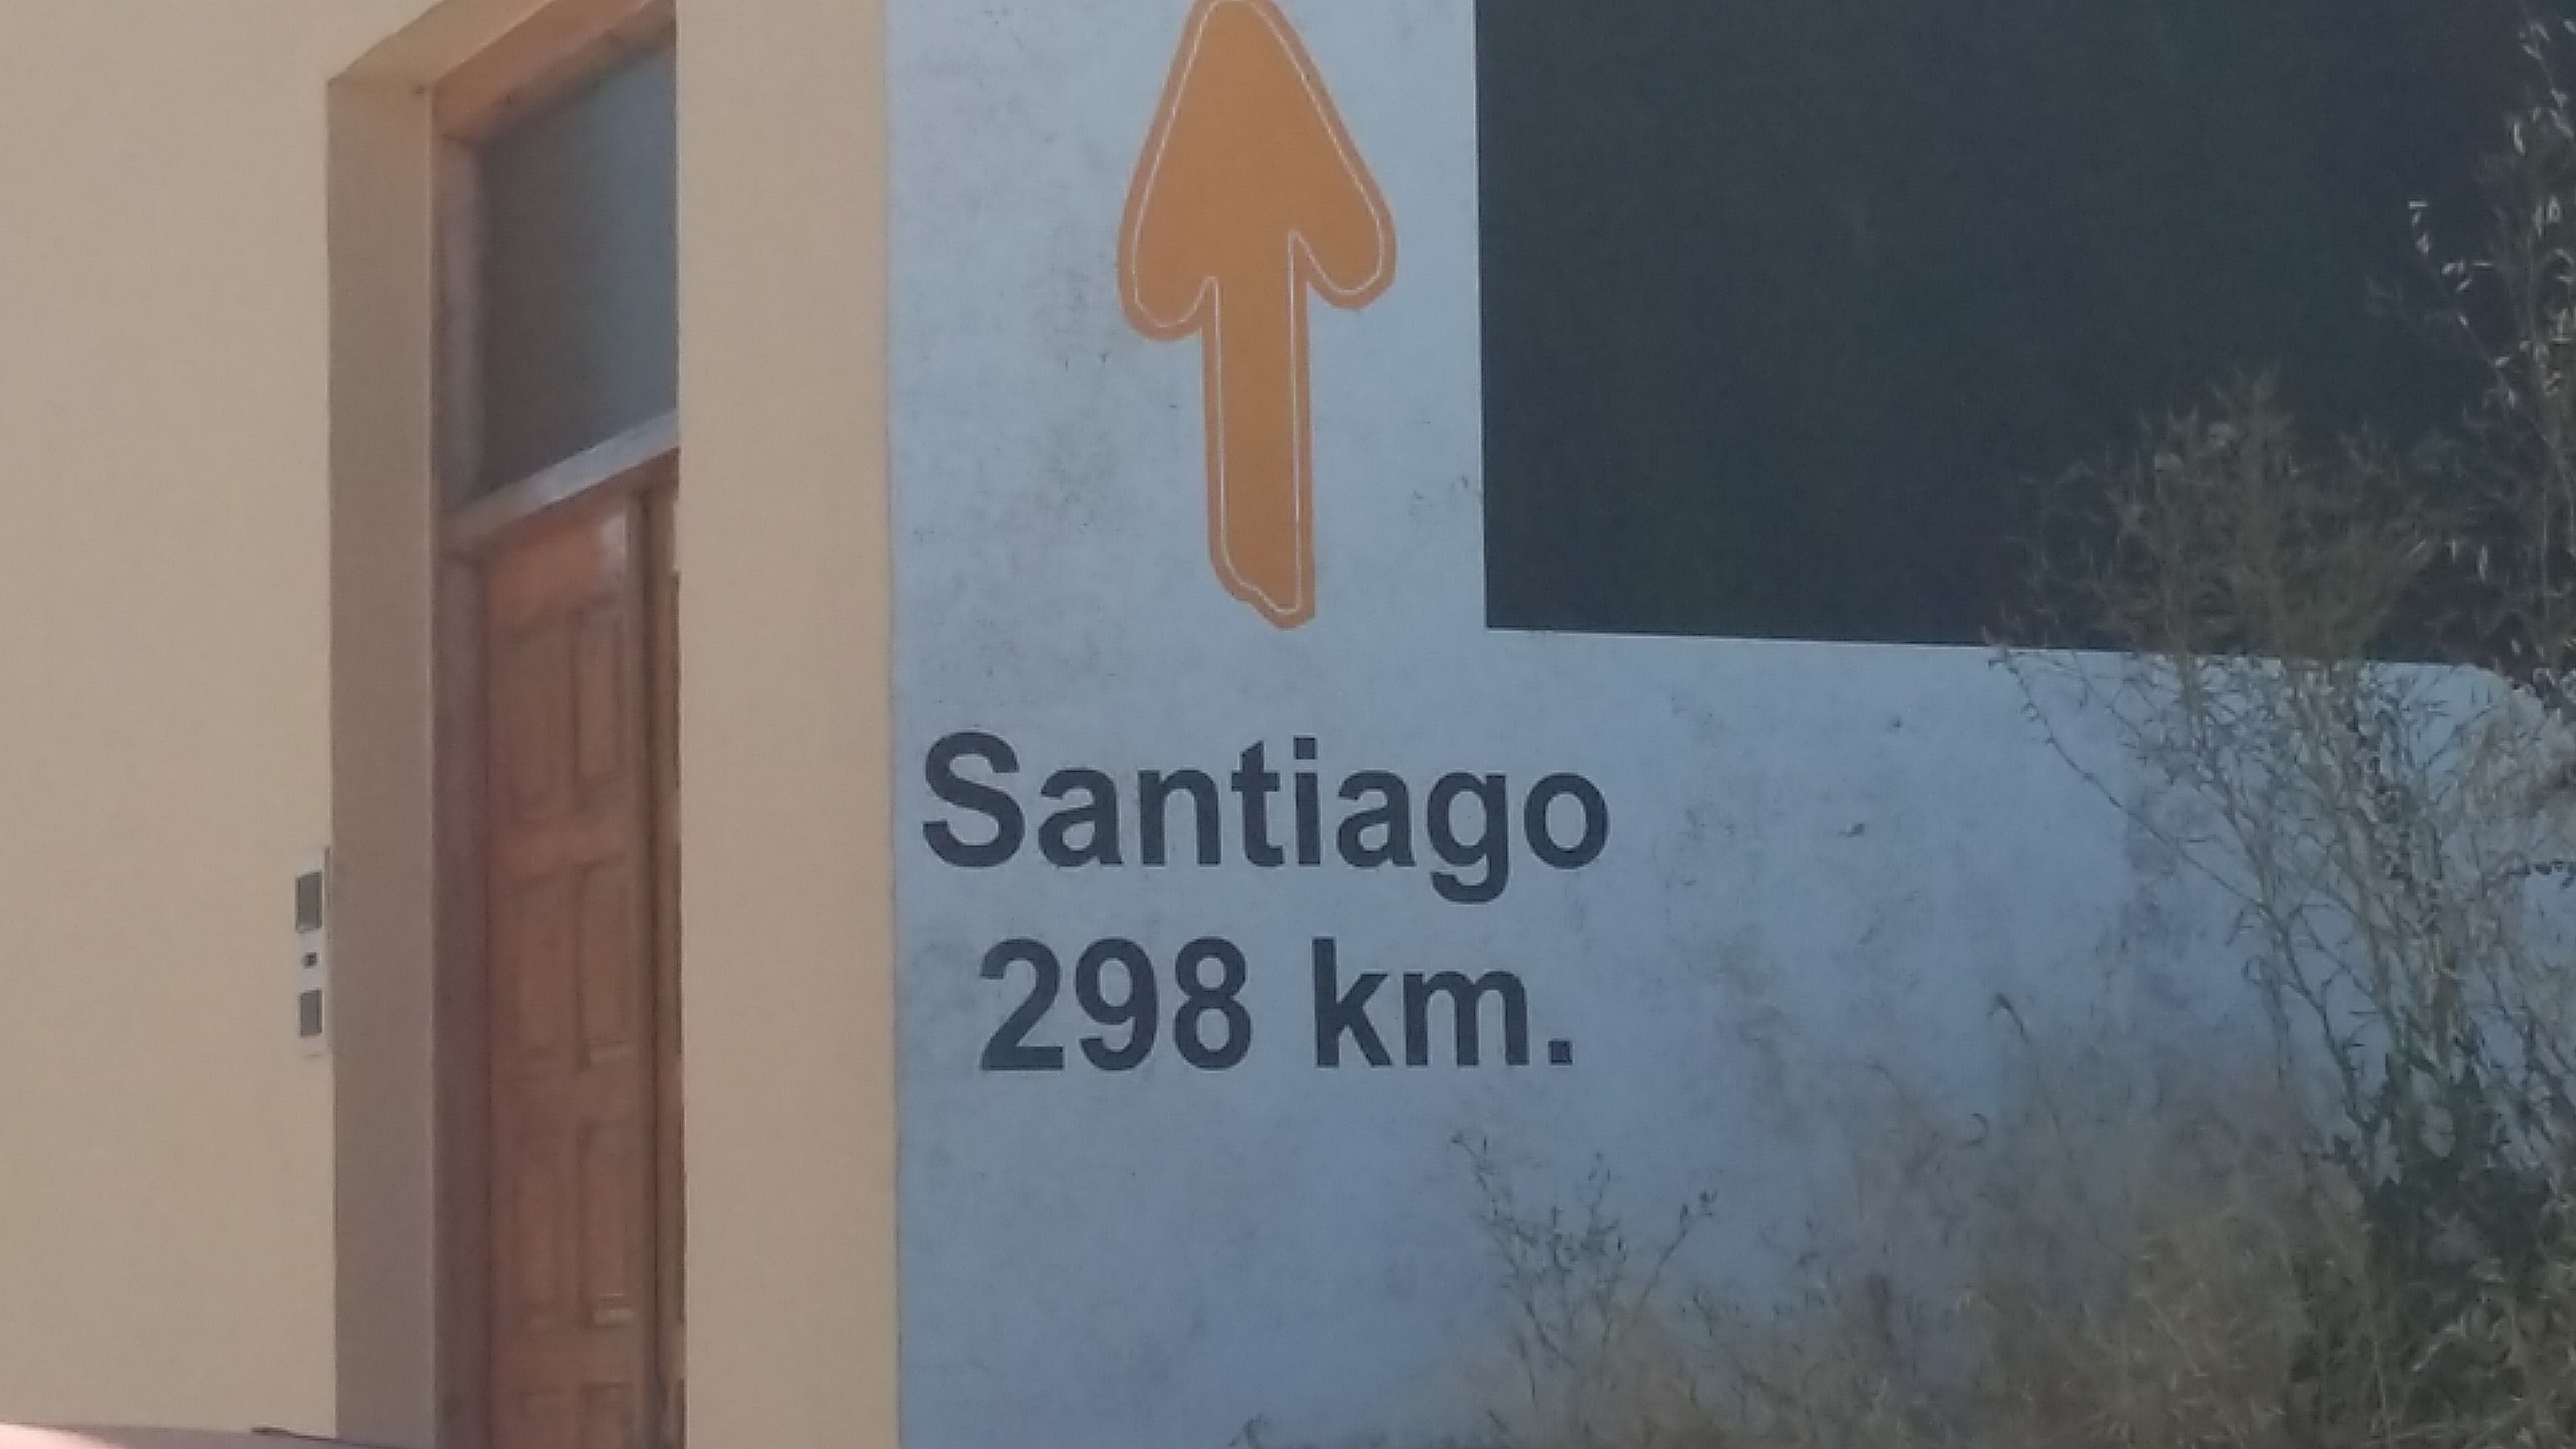 Santiago 298 km